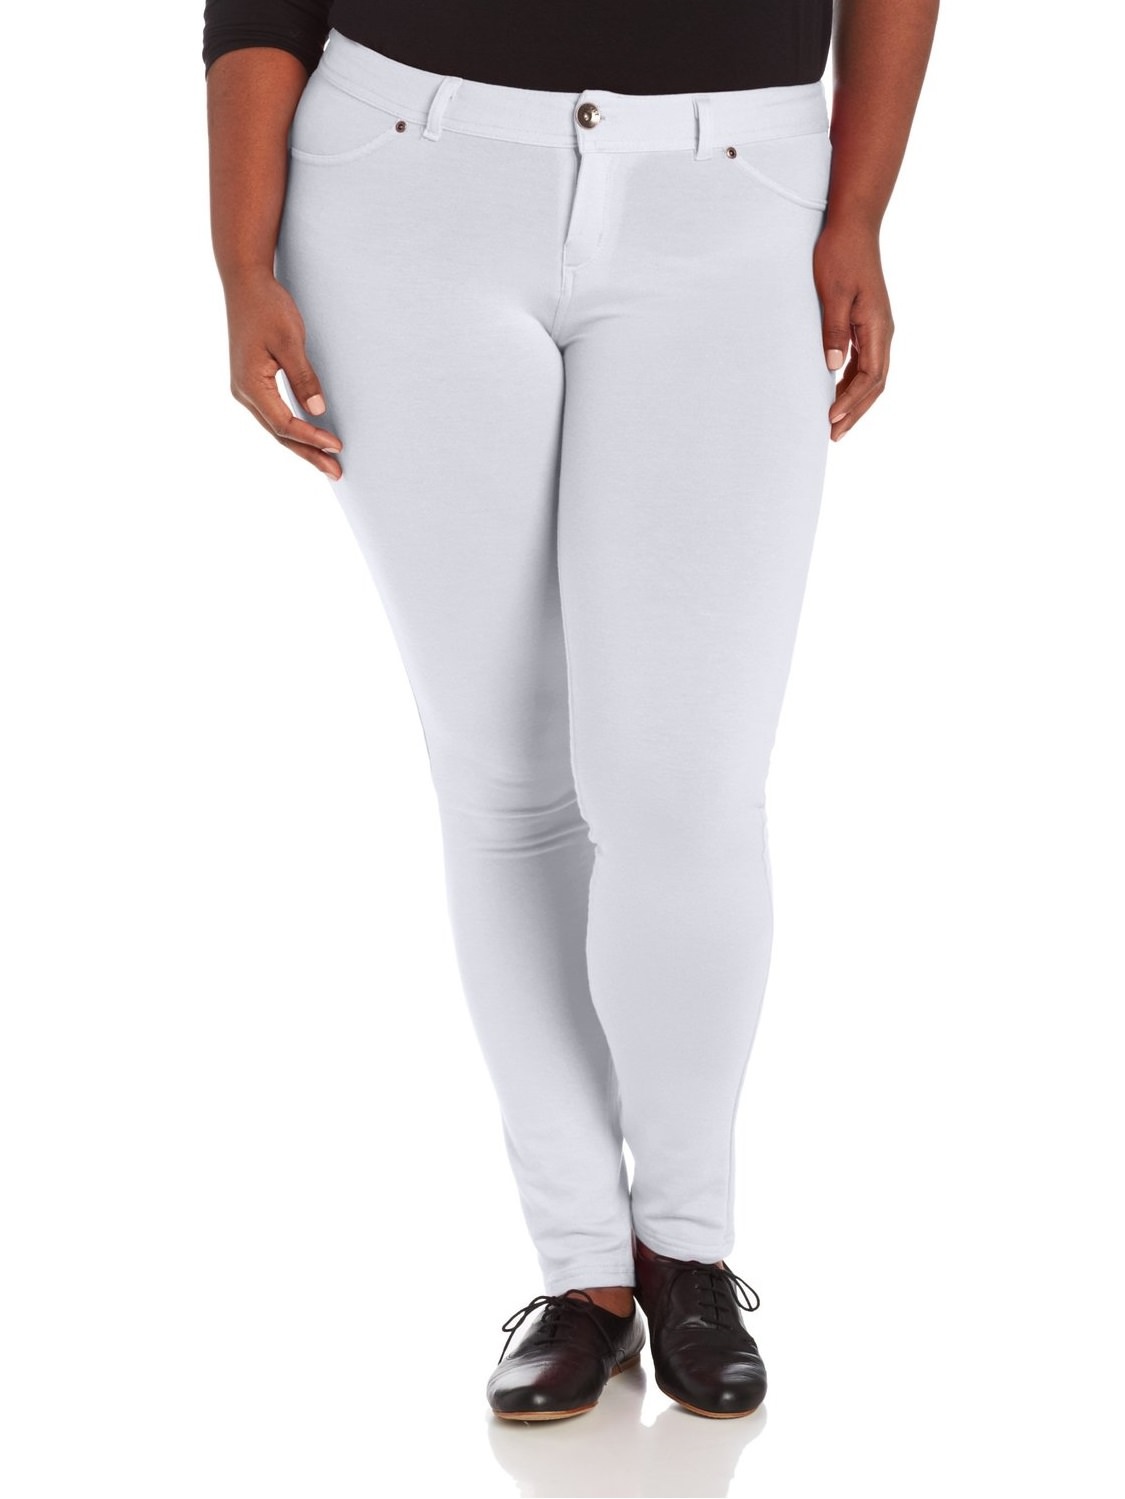 1826 Jeans Women's Plus Size Moleton Pants Cotton Ghana